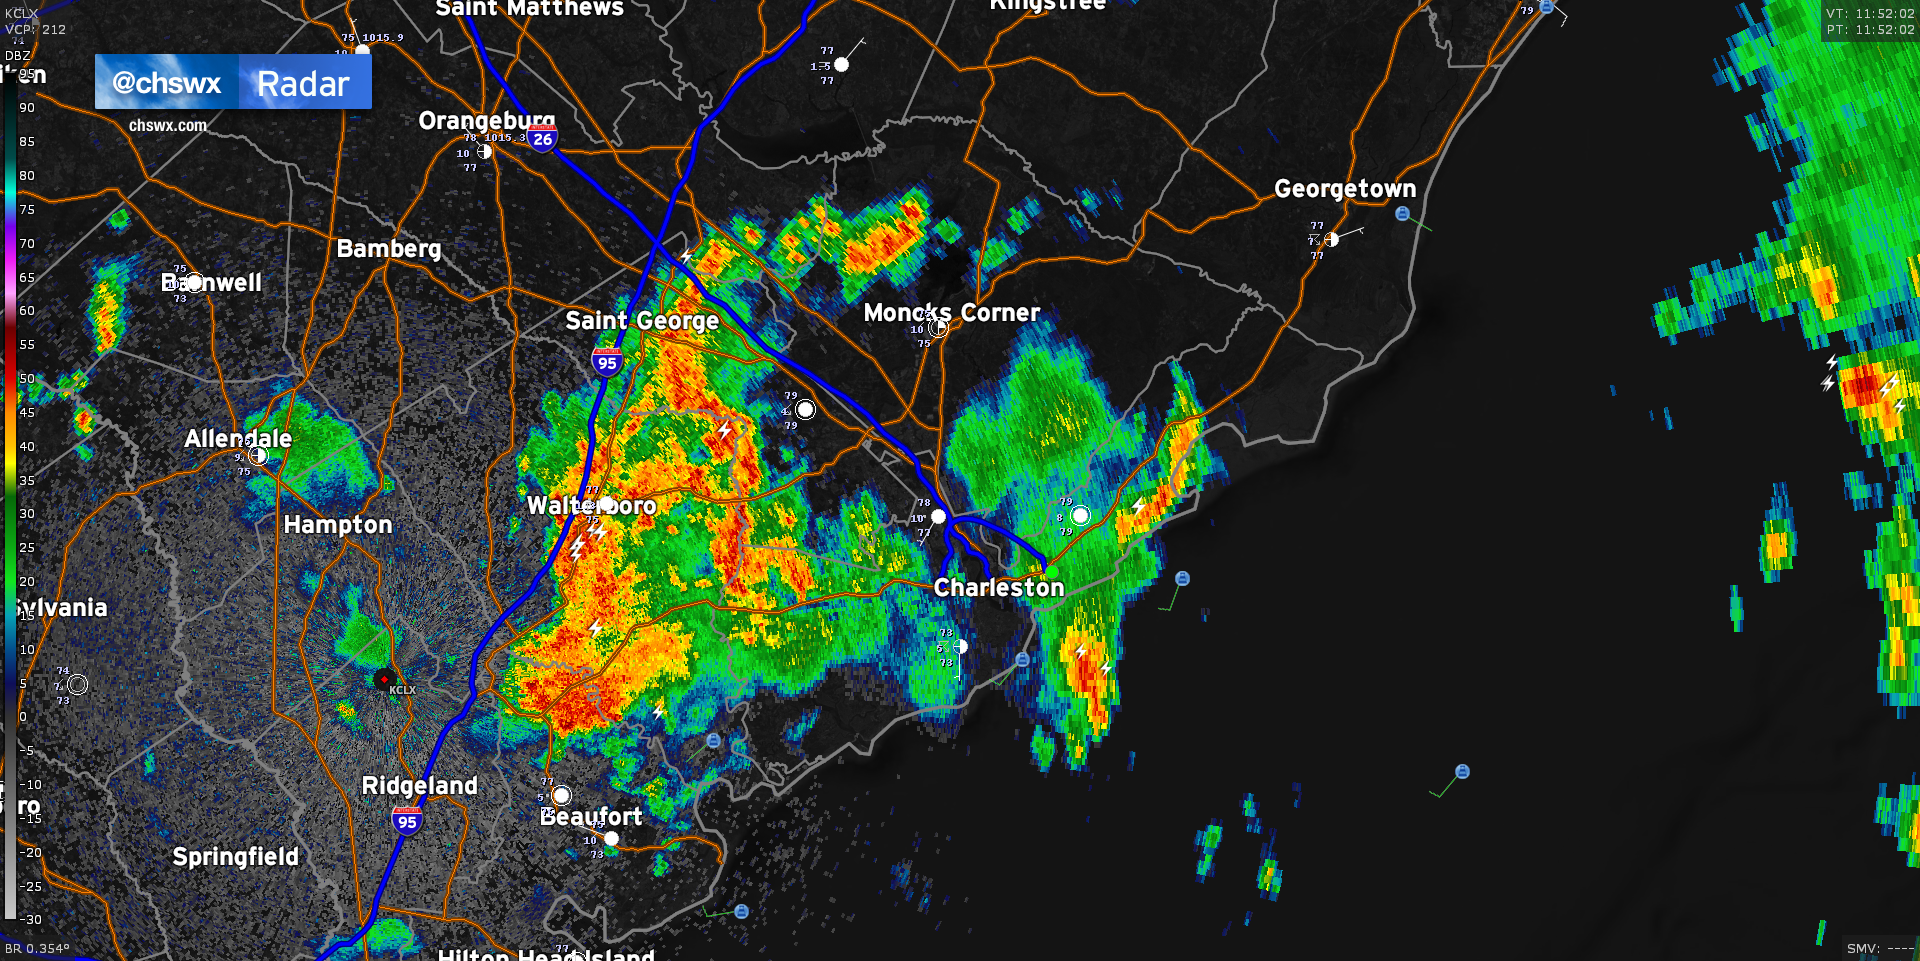 7:52 AM radar image from KCLX (Charleston, SC)